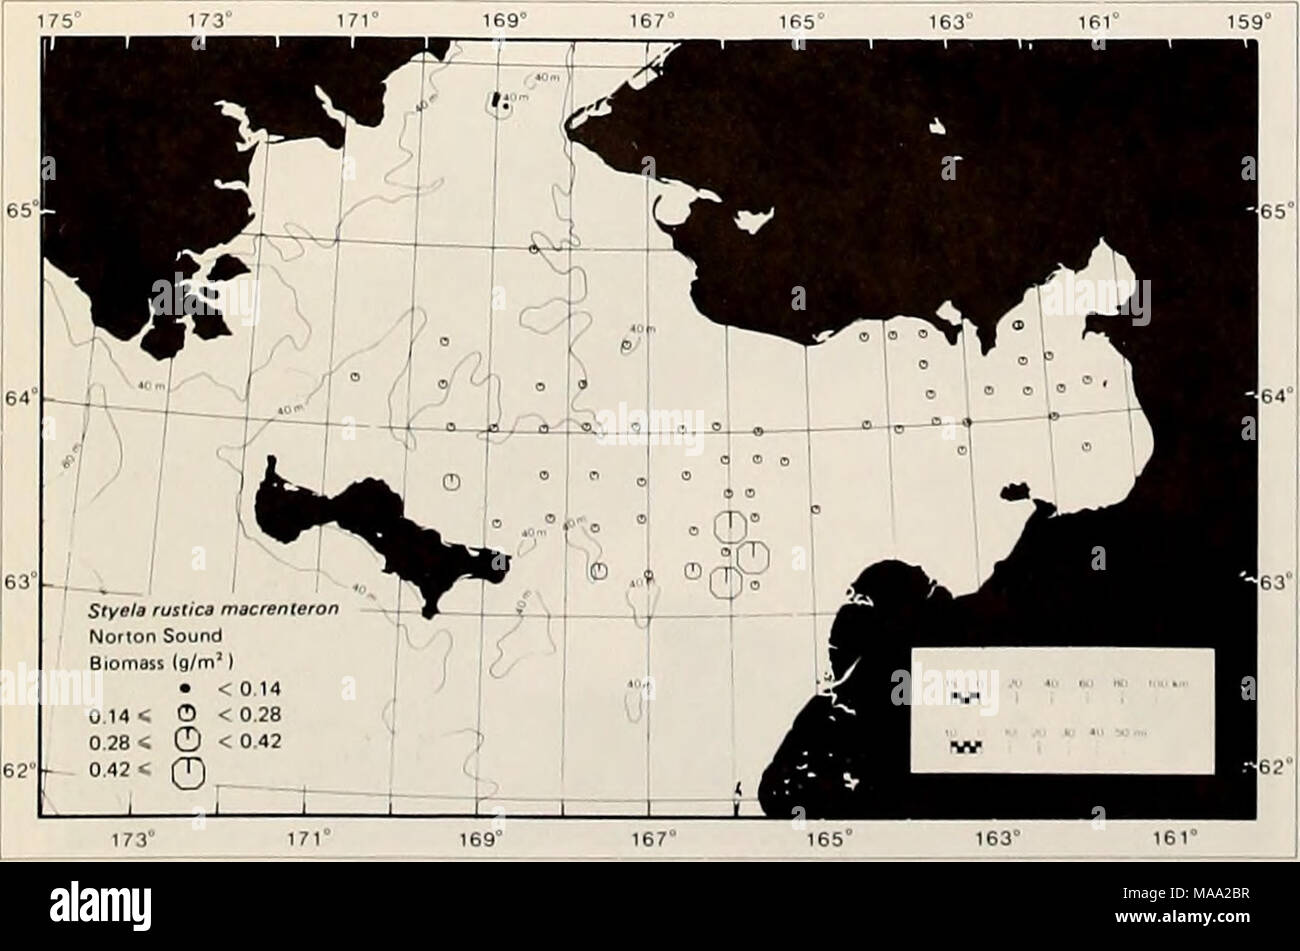 . The Eastern Bering Sea Shelf : oceanography and resources / edited by Donald W. Hood and John A. Calder . 170Â° 165Â° 160Â° 155Â° 69Â° Styeta rustics macrenteron Chukchi Sea ''^^M 69Â° ^^^^^1 â H Biomasi (9/m') ^^^^^^^1 1 ^ ' ' ^H â¢ &lt;0.14 0.14 &lt; 0 &lt; 0.28 ^^^^^H - 1 0.28 &lt; 0 -'^^^^^^^H 68&quot; 67Â° fc .' â¢ . â¢ â â ' 67Â° 66Â° 66&quot; 170&quot; 165Â° 160Â° Figure 65-36. Distribution and biomass of the tunicate Styela rustica macrenteron in the northeastern Bering Sea. Figure 65-37. Distribution and biomass of the tunicate Styela rustica macrenteron in the southeastern Chukchi  Stock Photo